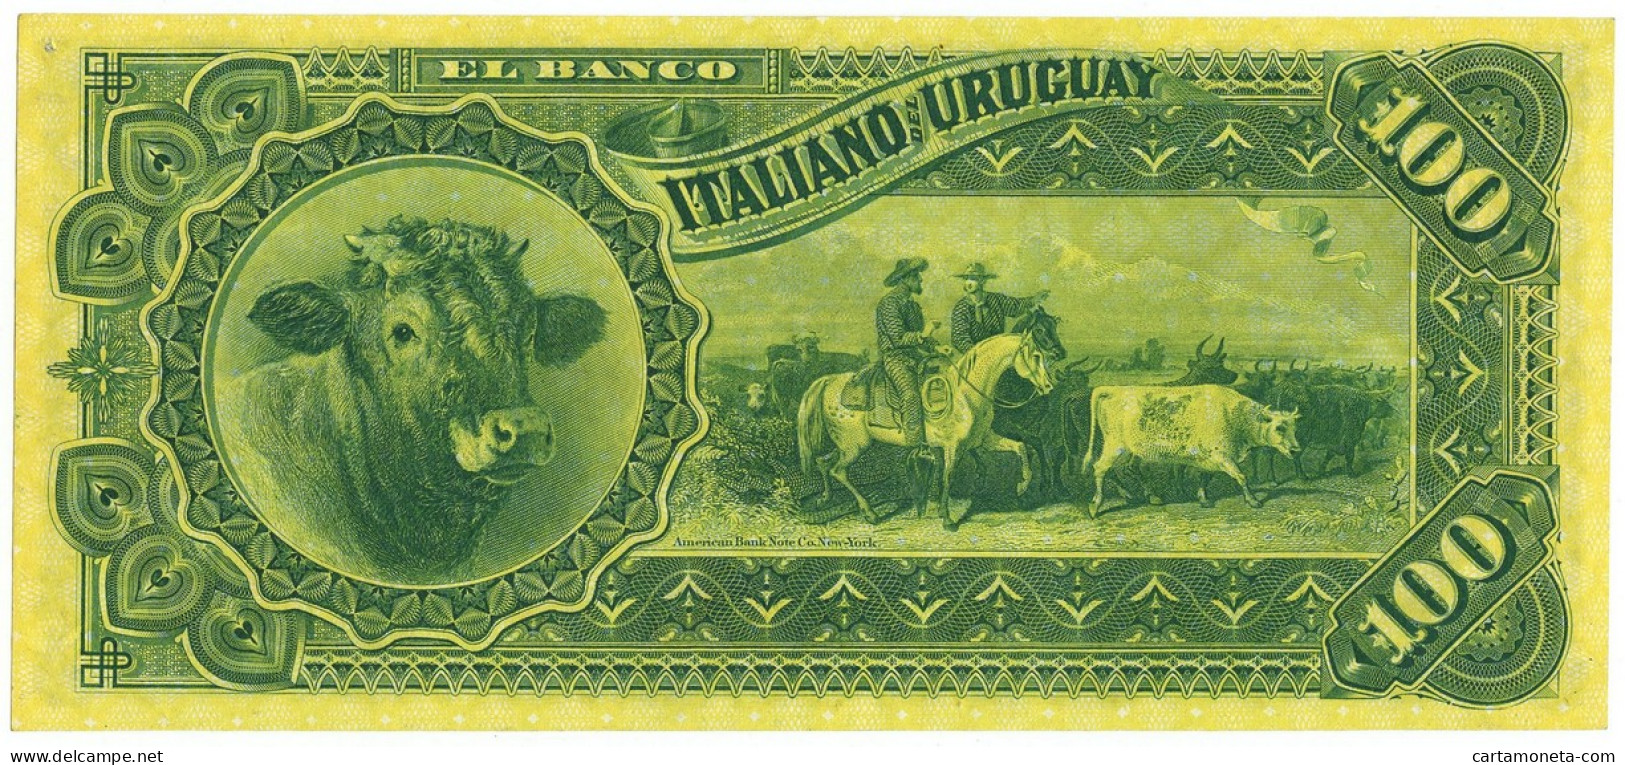 100 PESOS EL BANCO ITALIANO DELL'URUGUAY MONTEVIDEO 20/09/1887 QFDS - [ 7] Fouten & Varianten